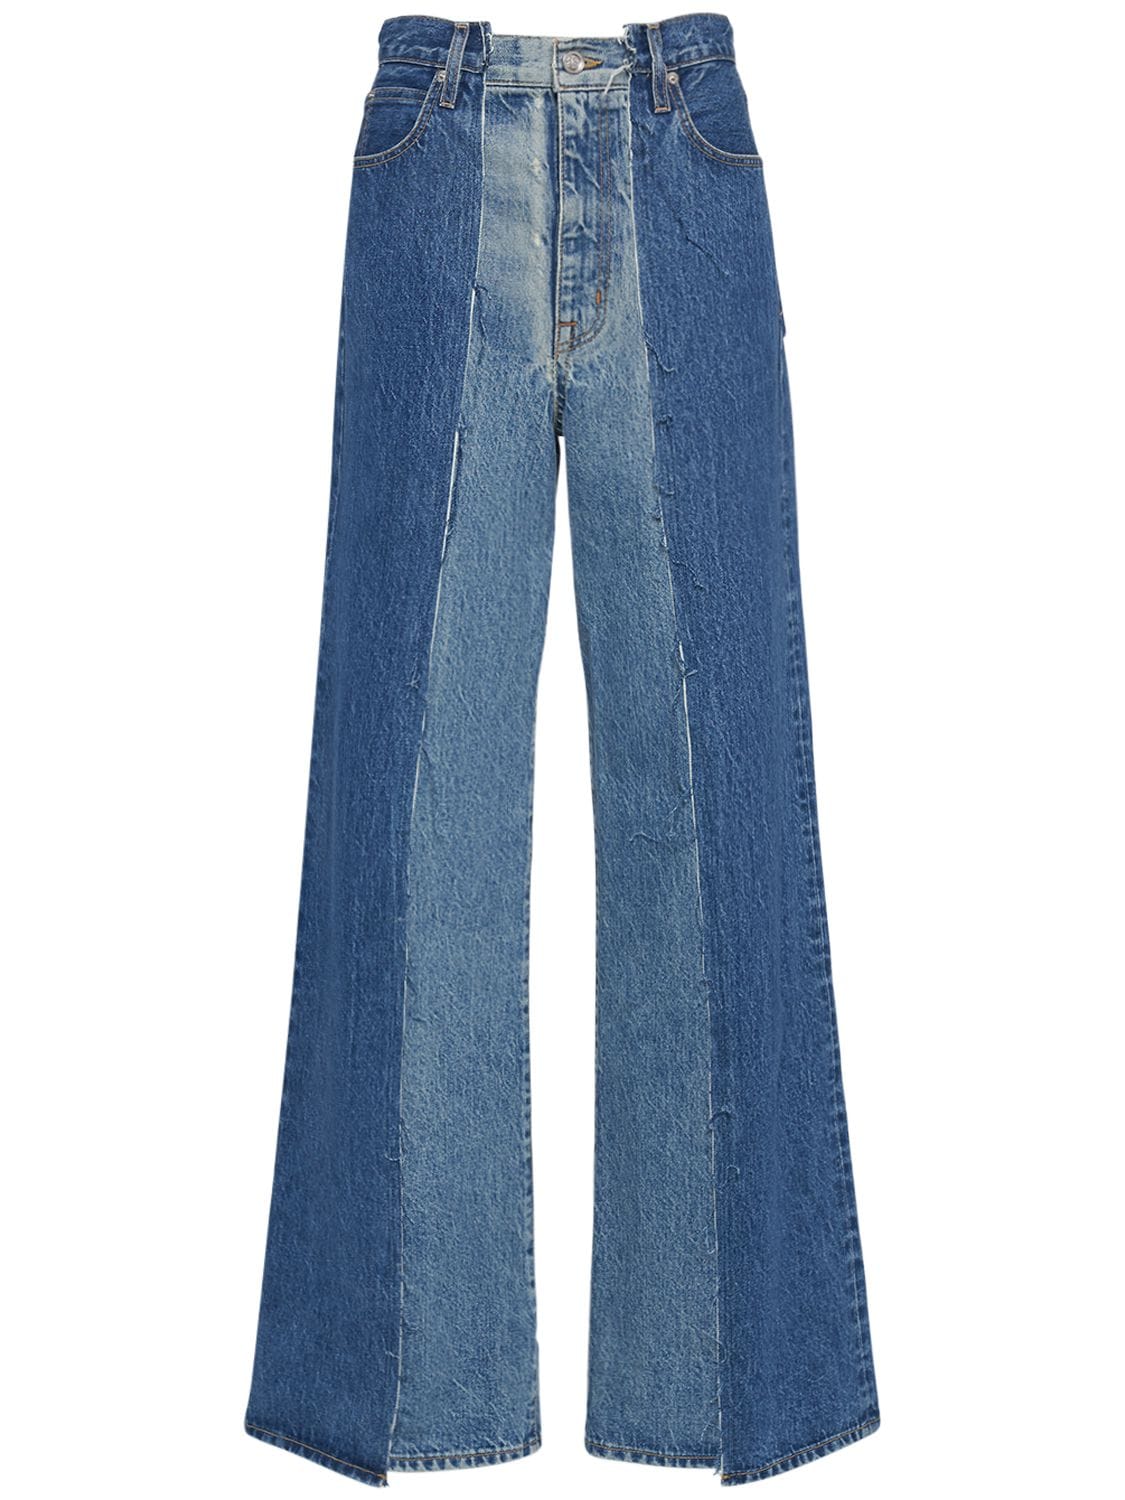 Image of Re-worked Eva Paneled Denim Jeans